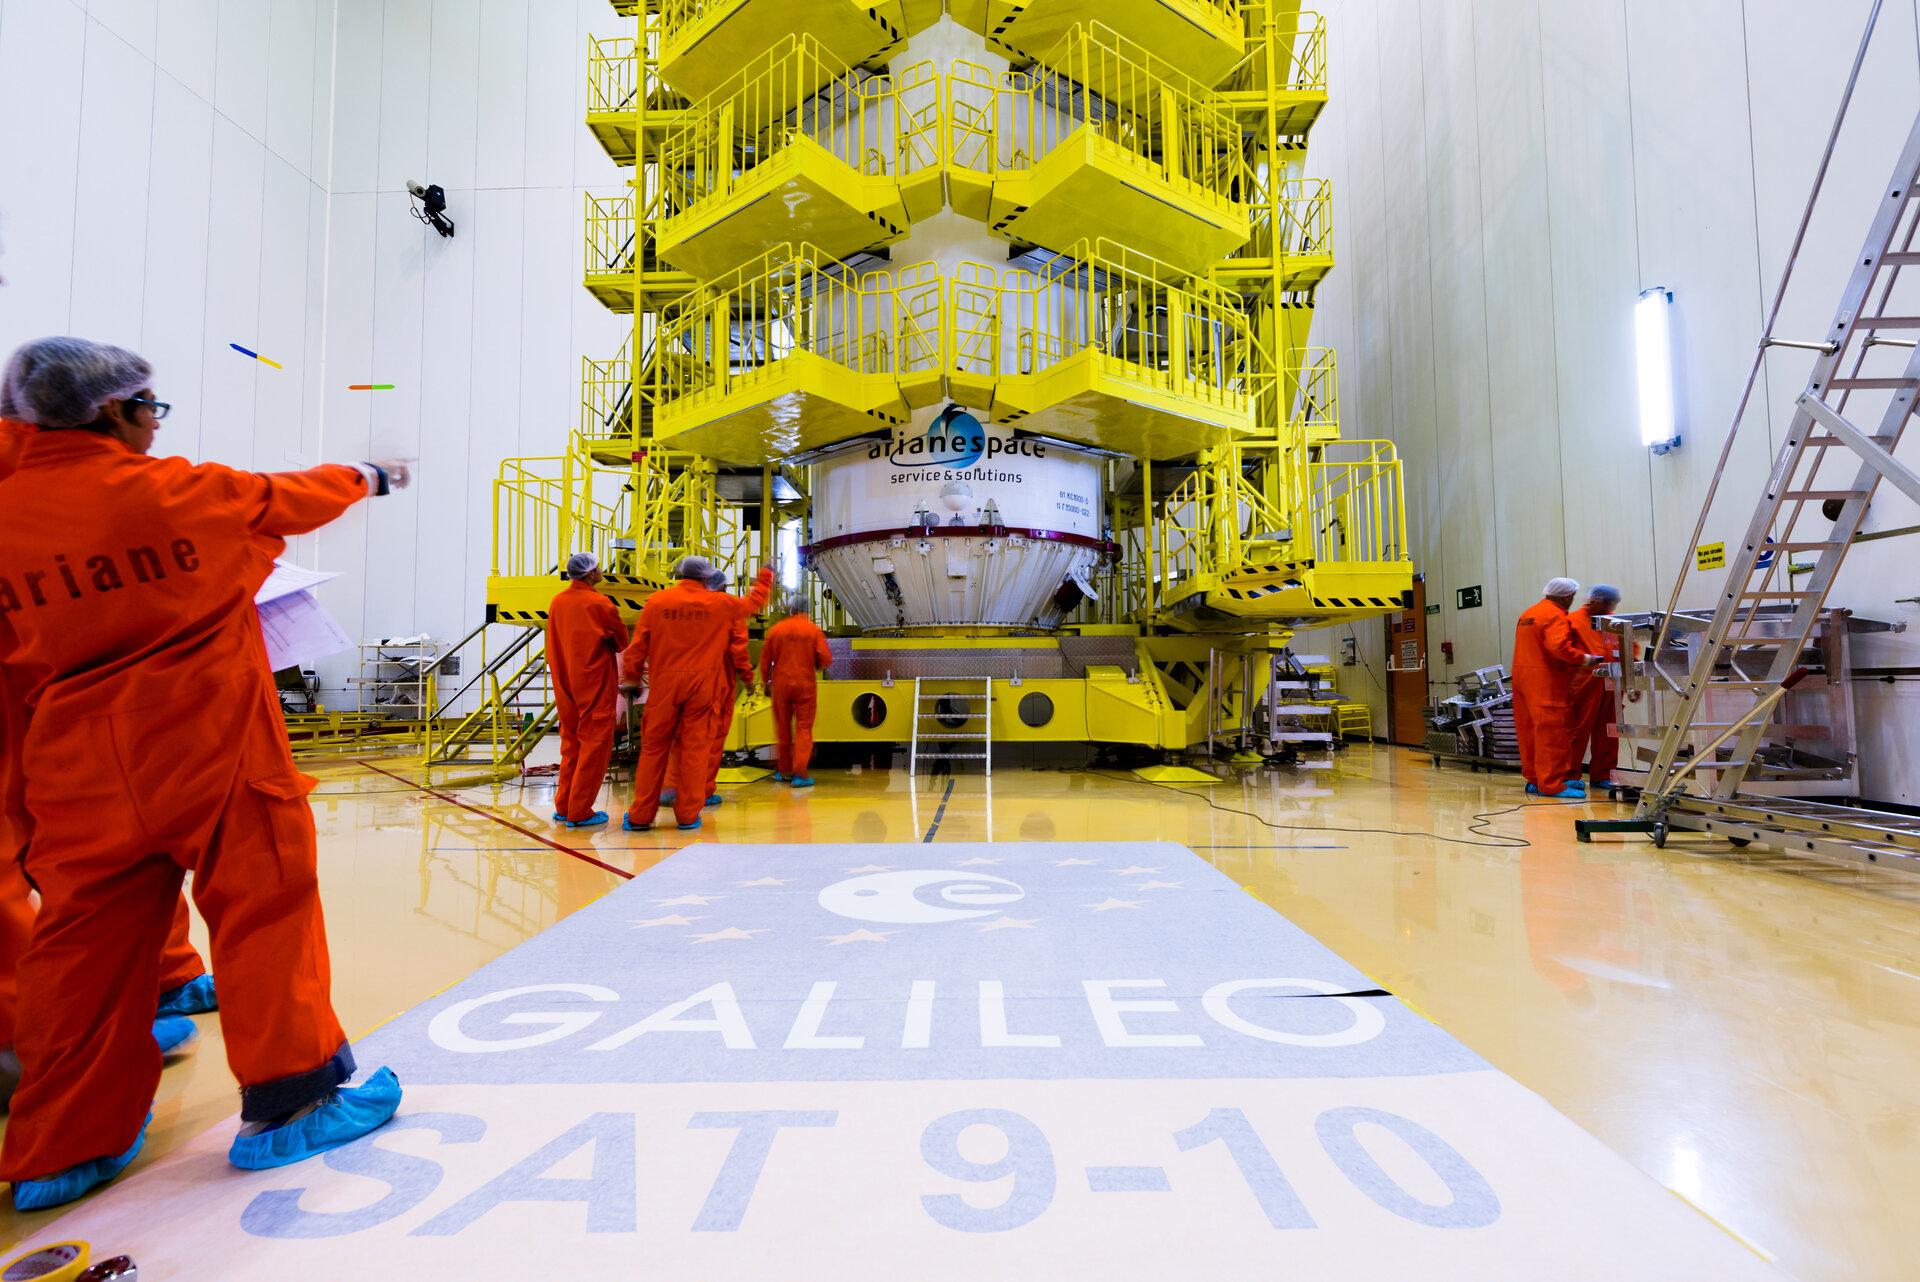 Galileo navigation satellites 9-10 are positioned inside the Soyuz fairing